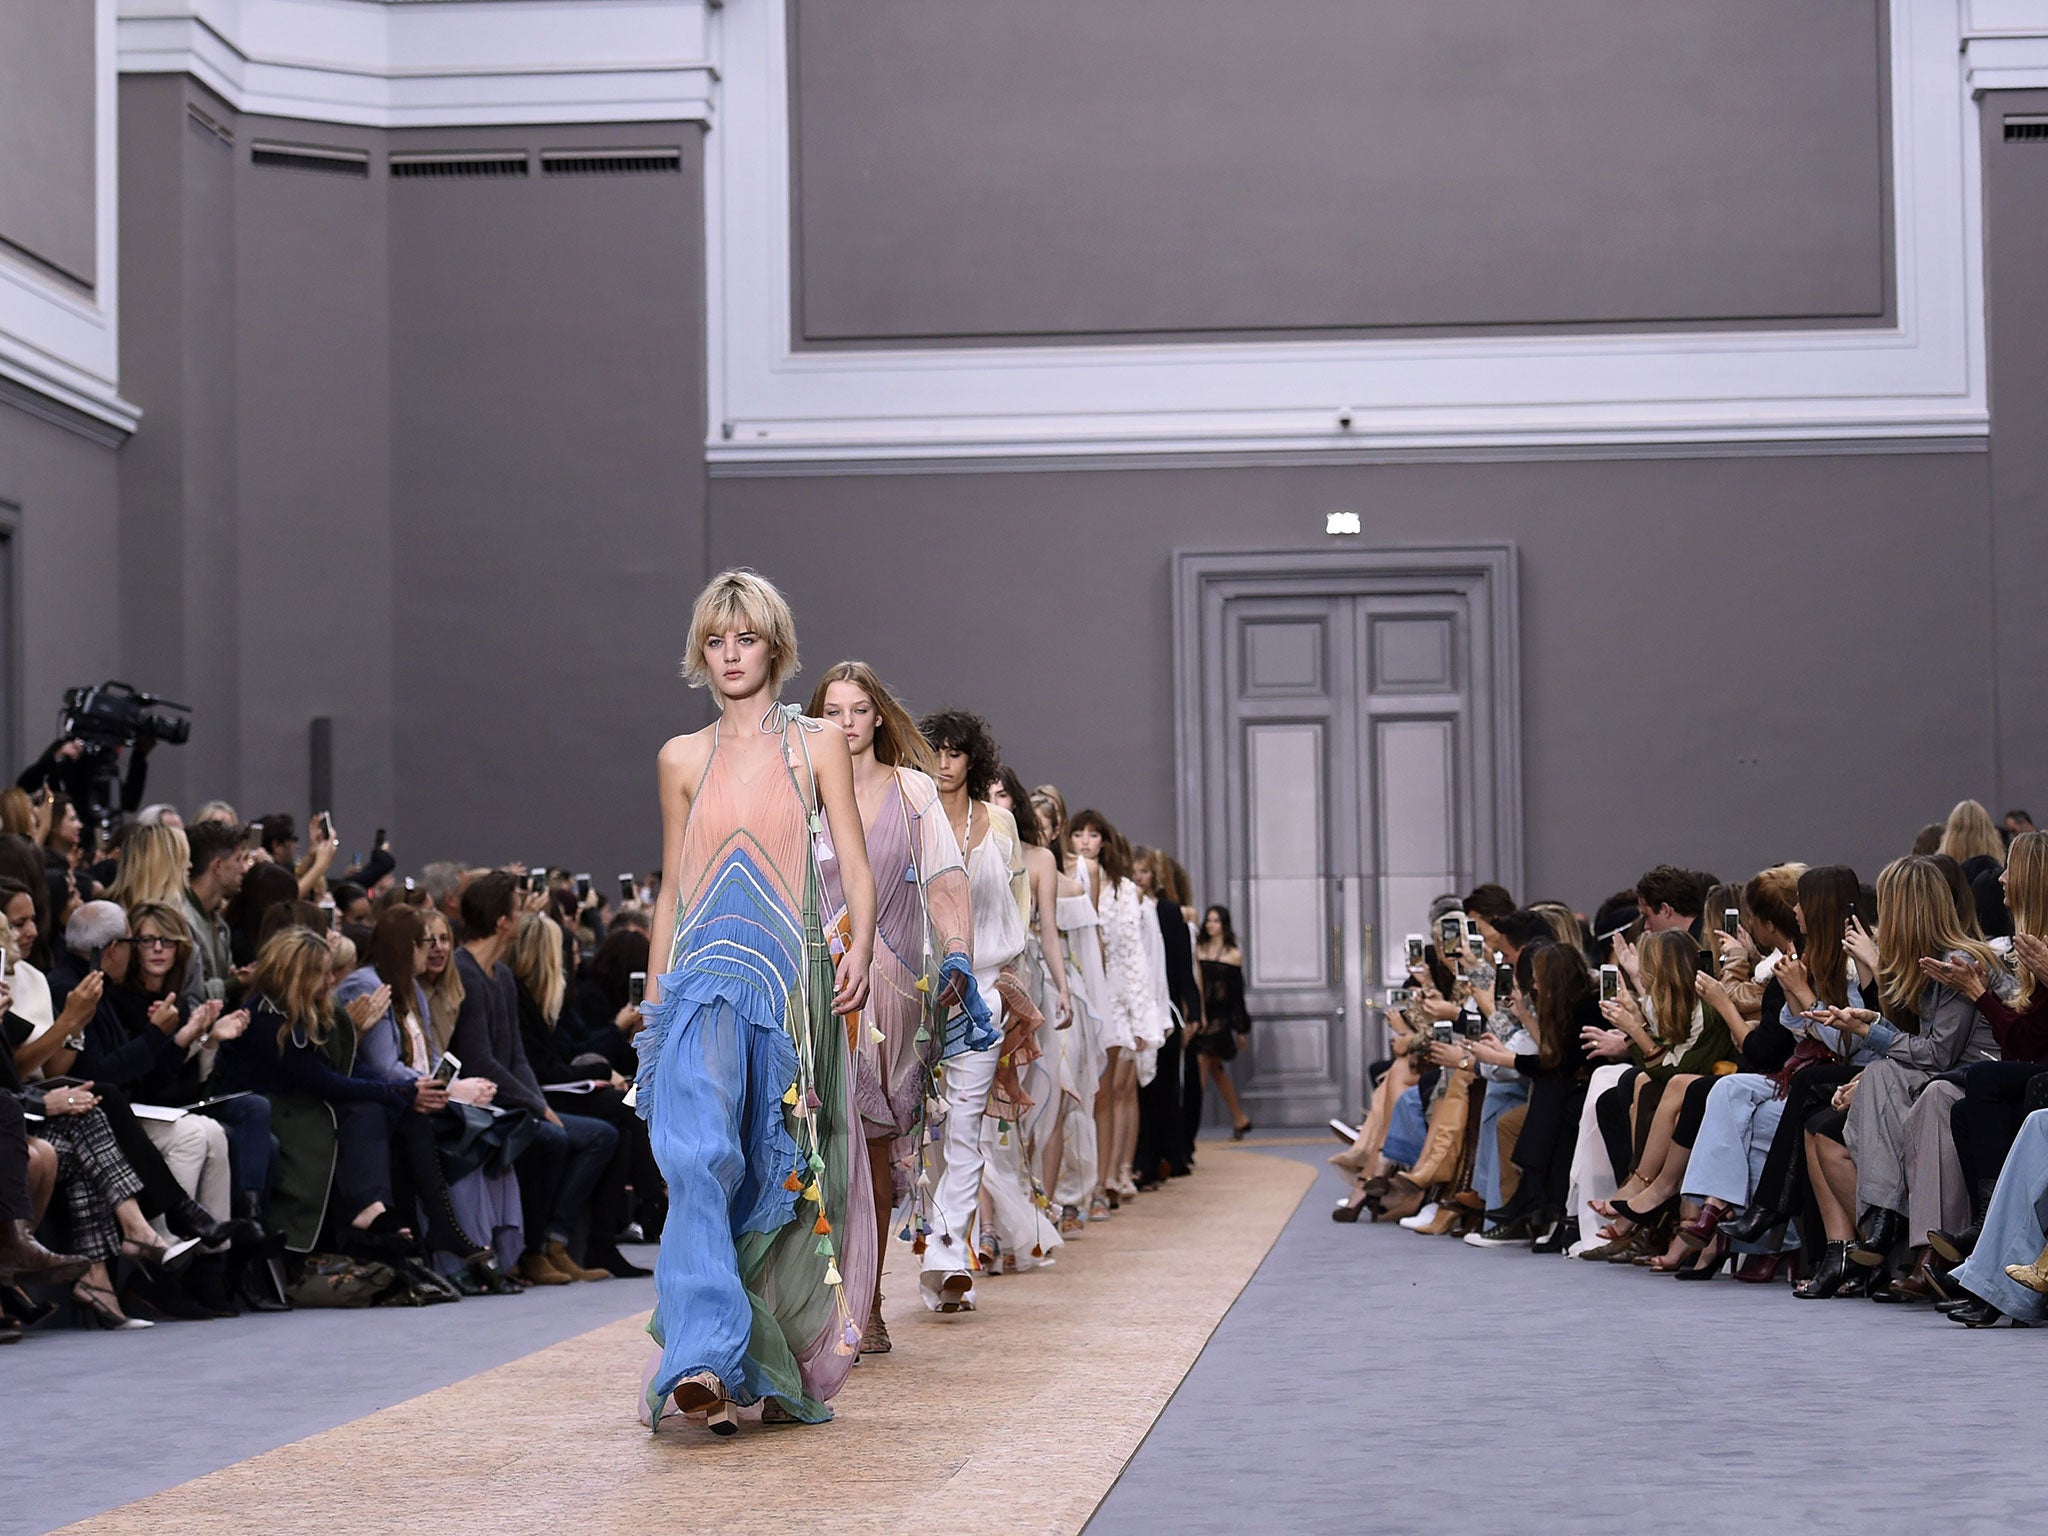 Paris Fashion Week 2015 Gender Lines Were Blurred As Designers 